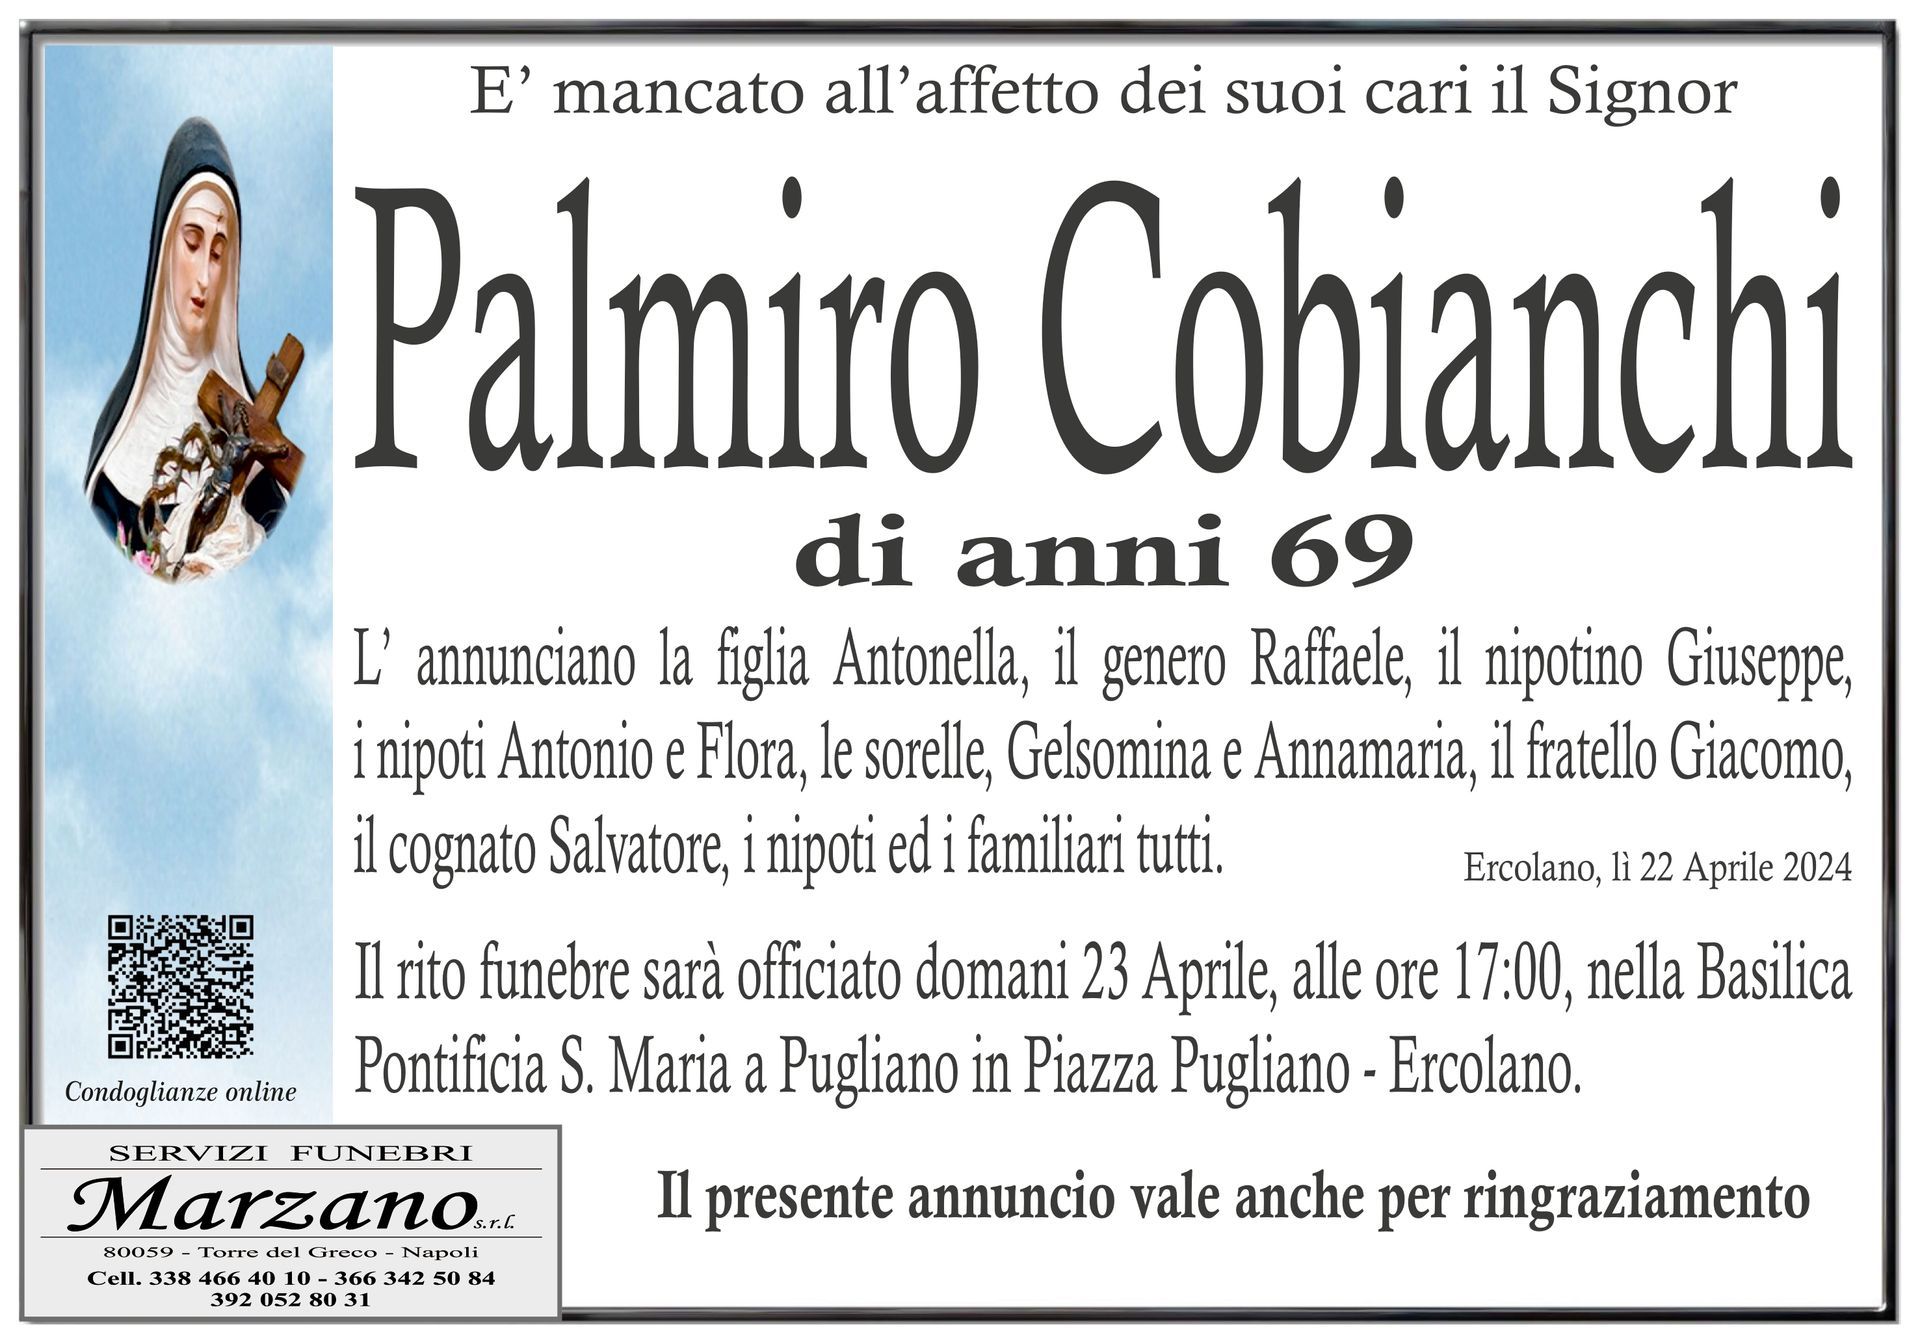 Palmiro Cobianchi